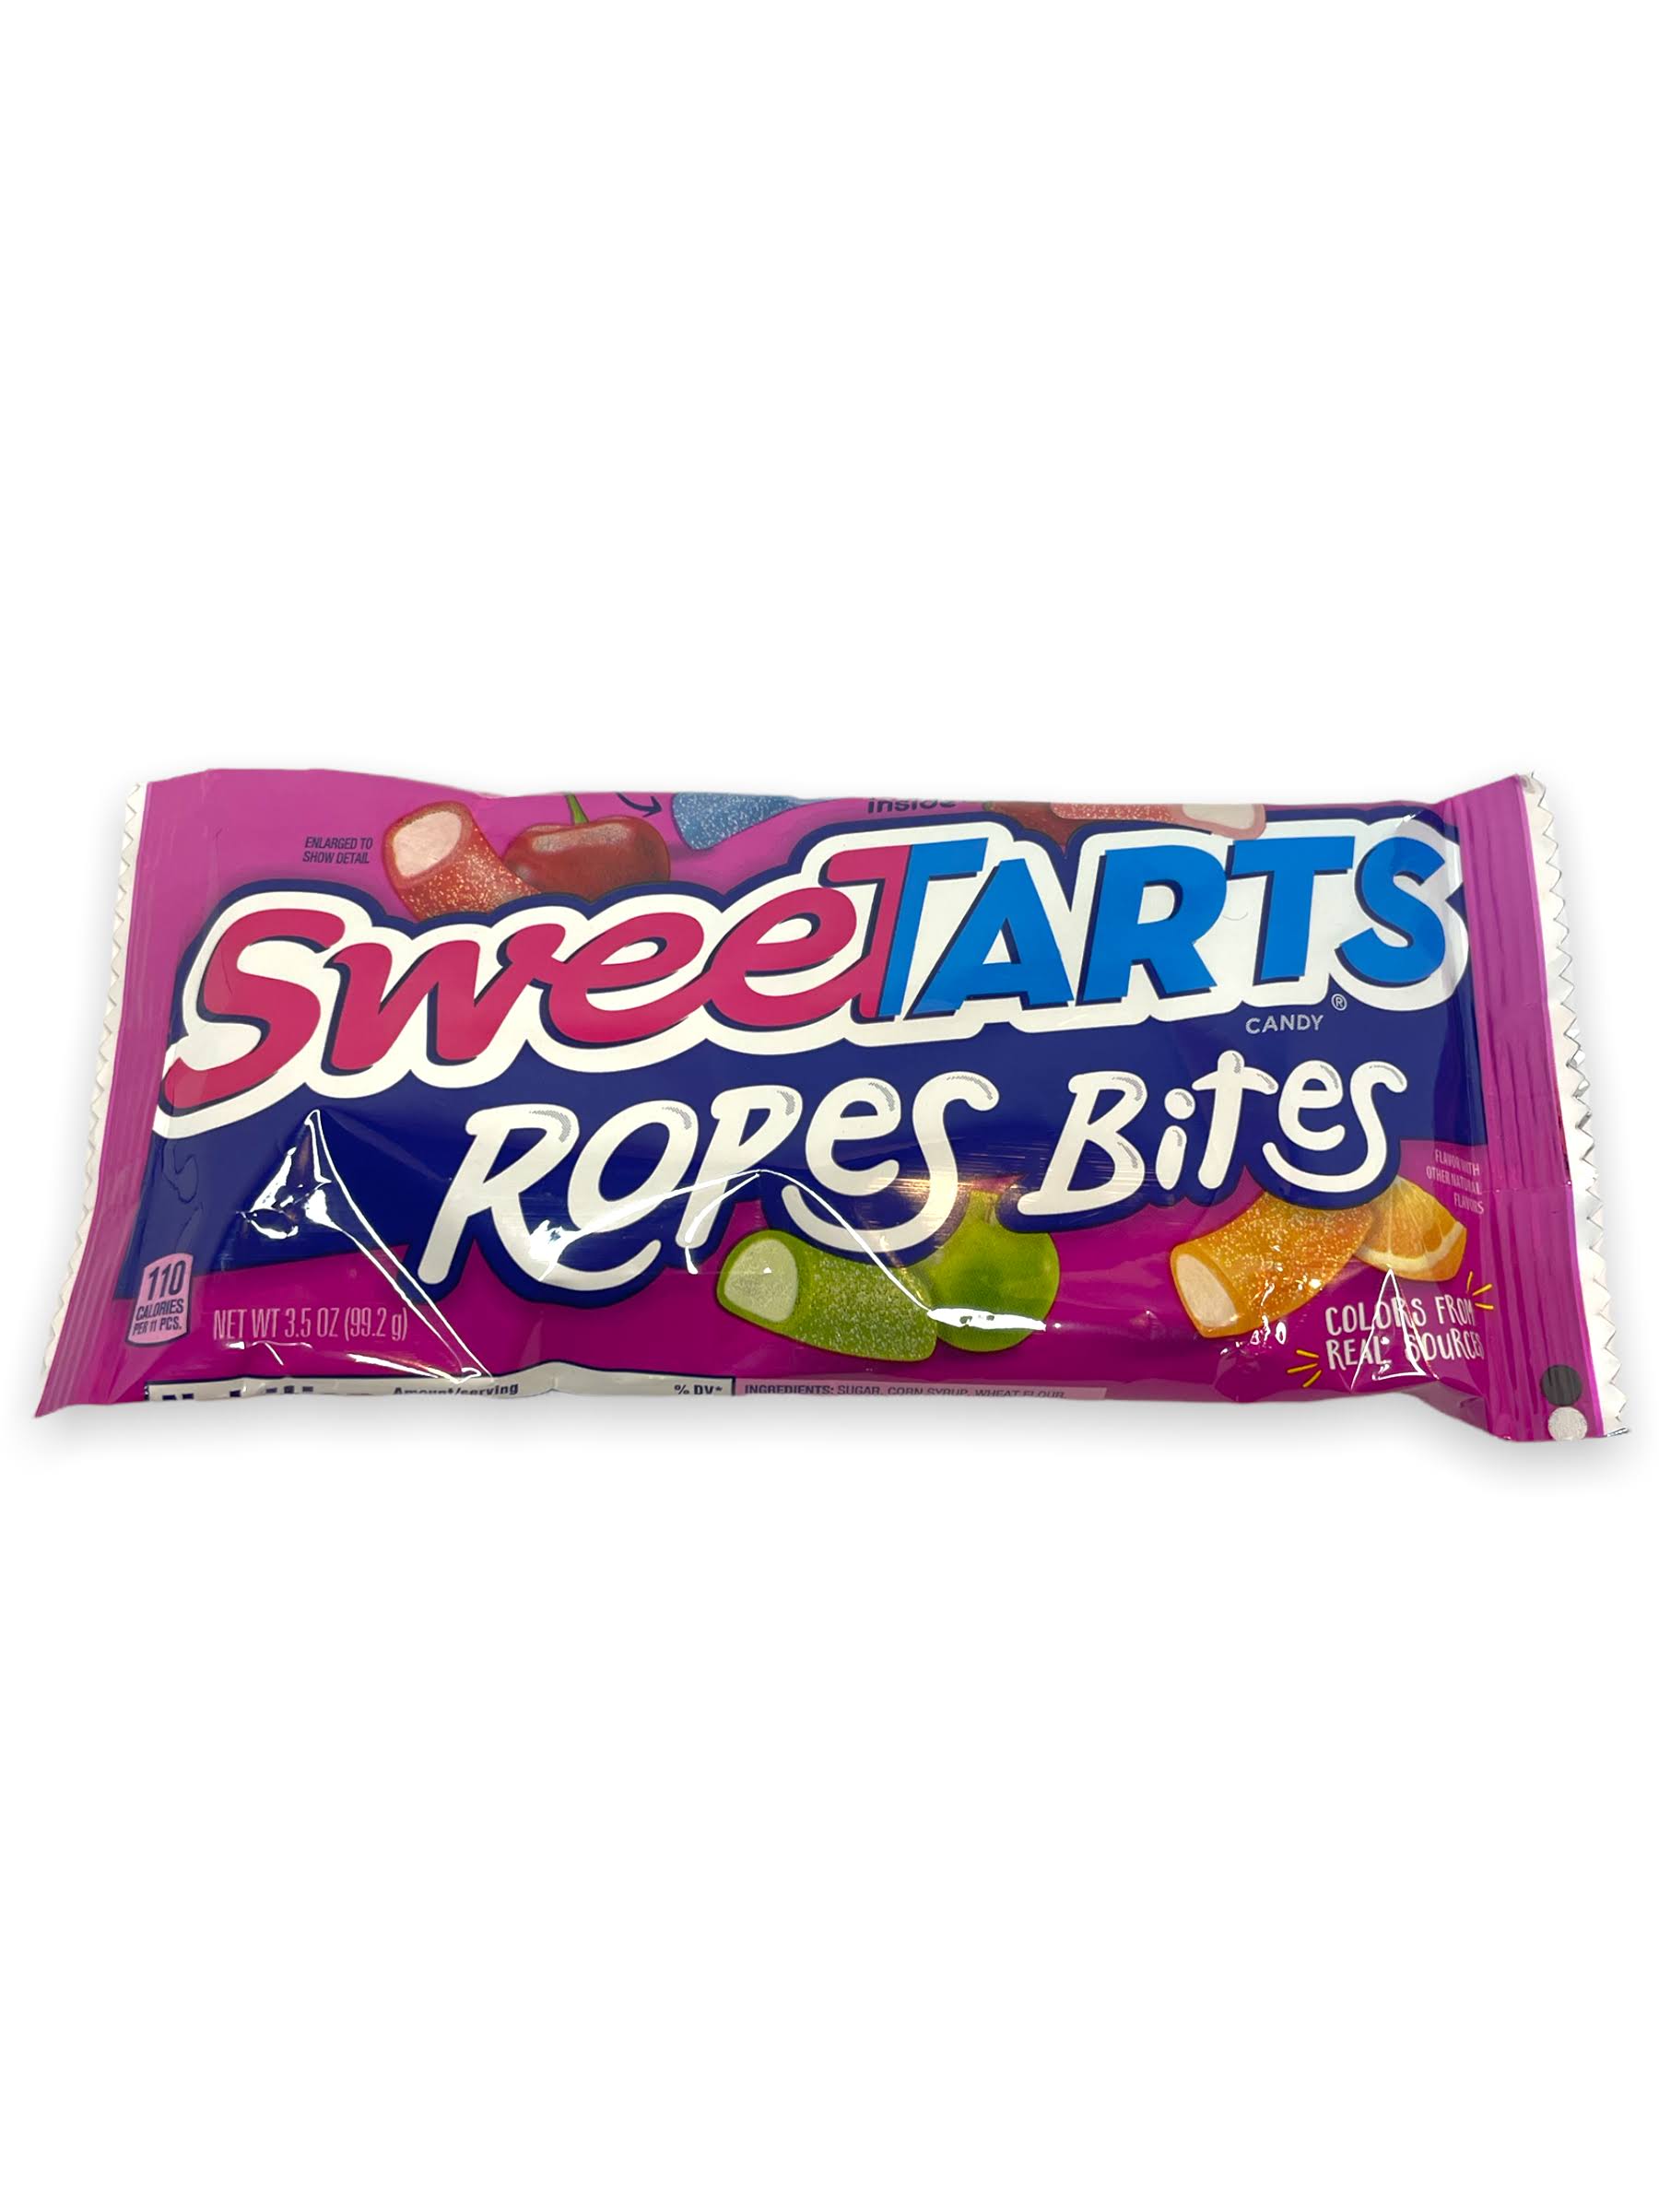 Sweetarts Rope Bites Share Pack 4 x 99g